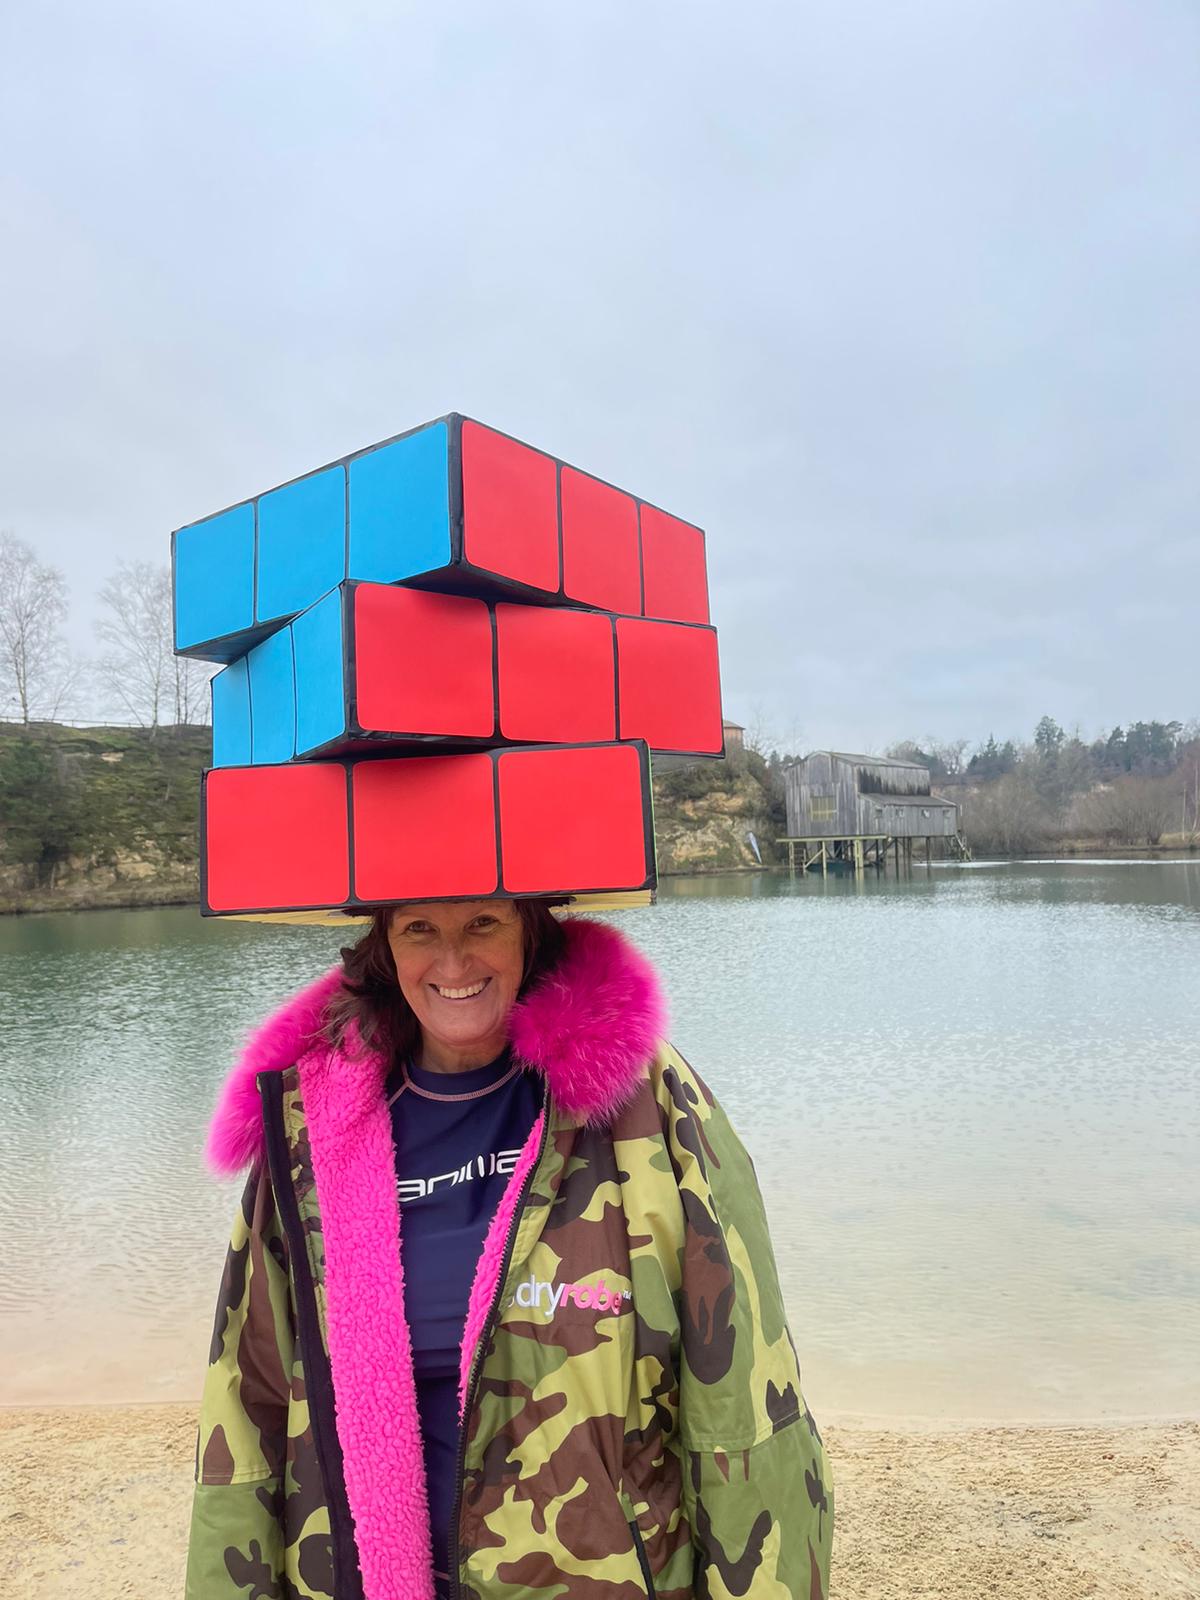 Rubik's cube on someone's head 